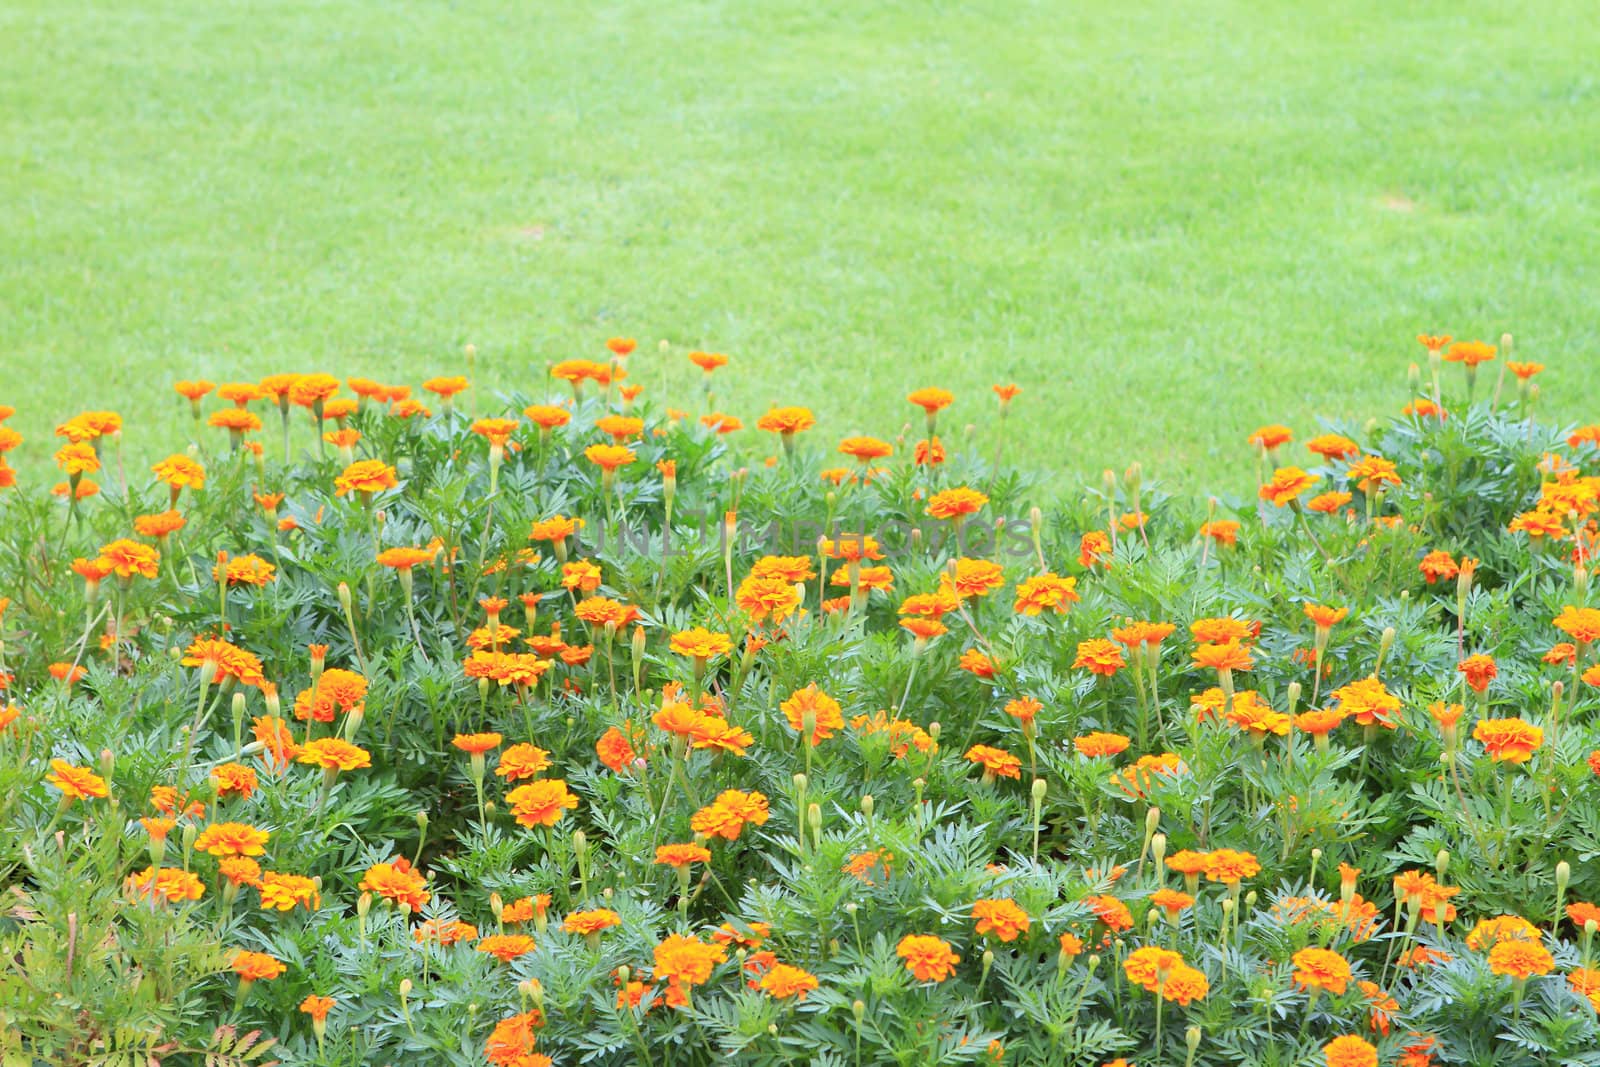 Marigold Yellow Flower field in the green garden.